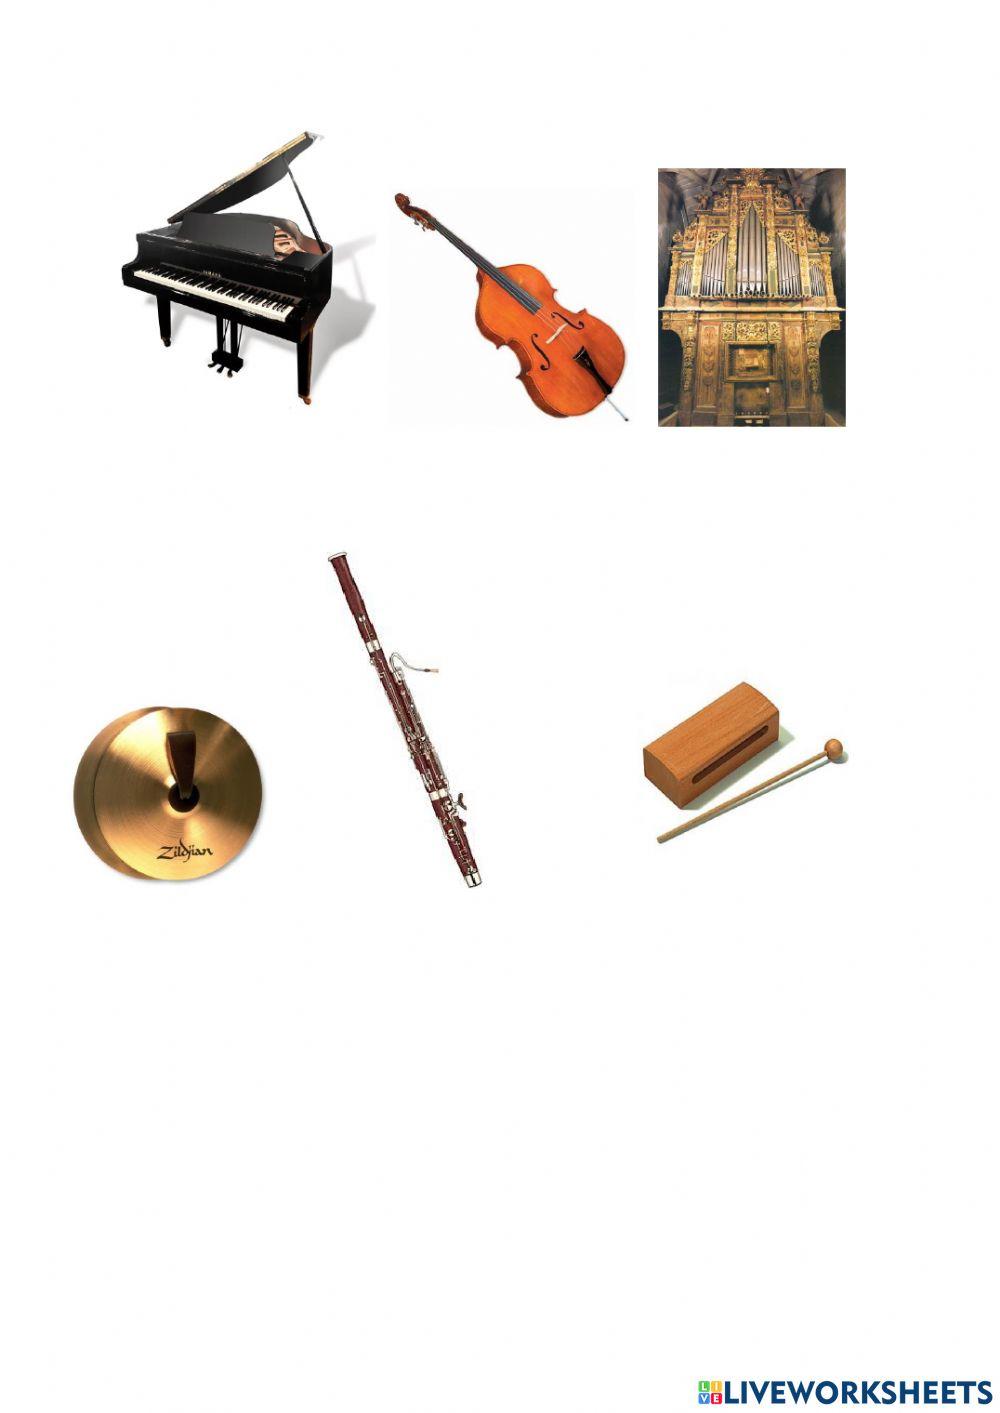 Instrumentos musicales